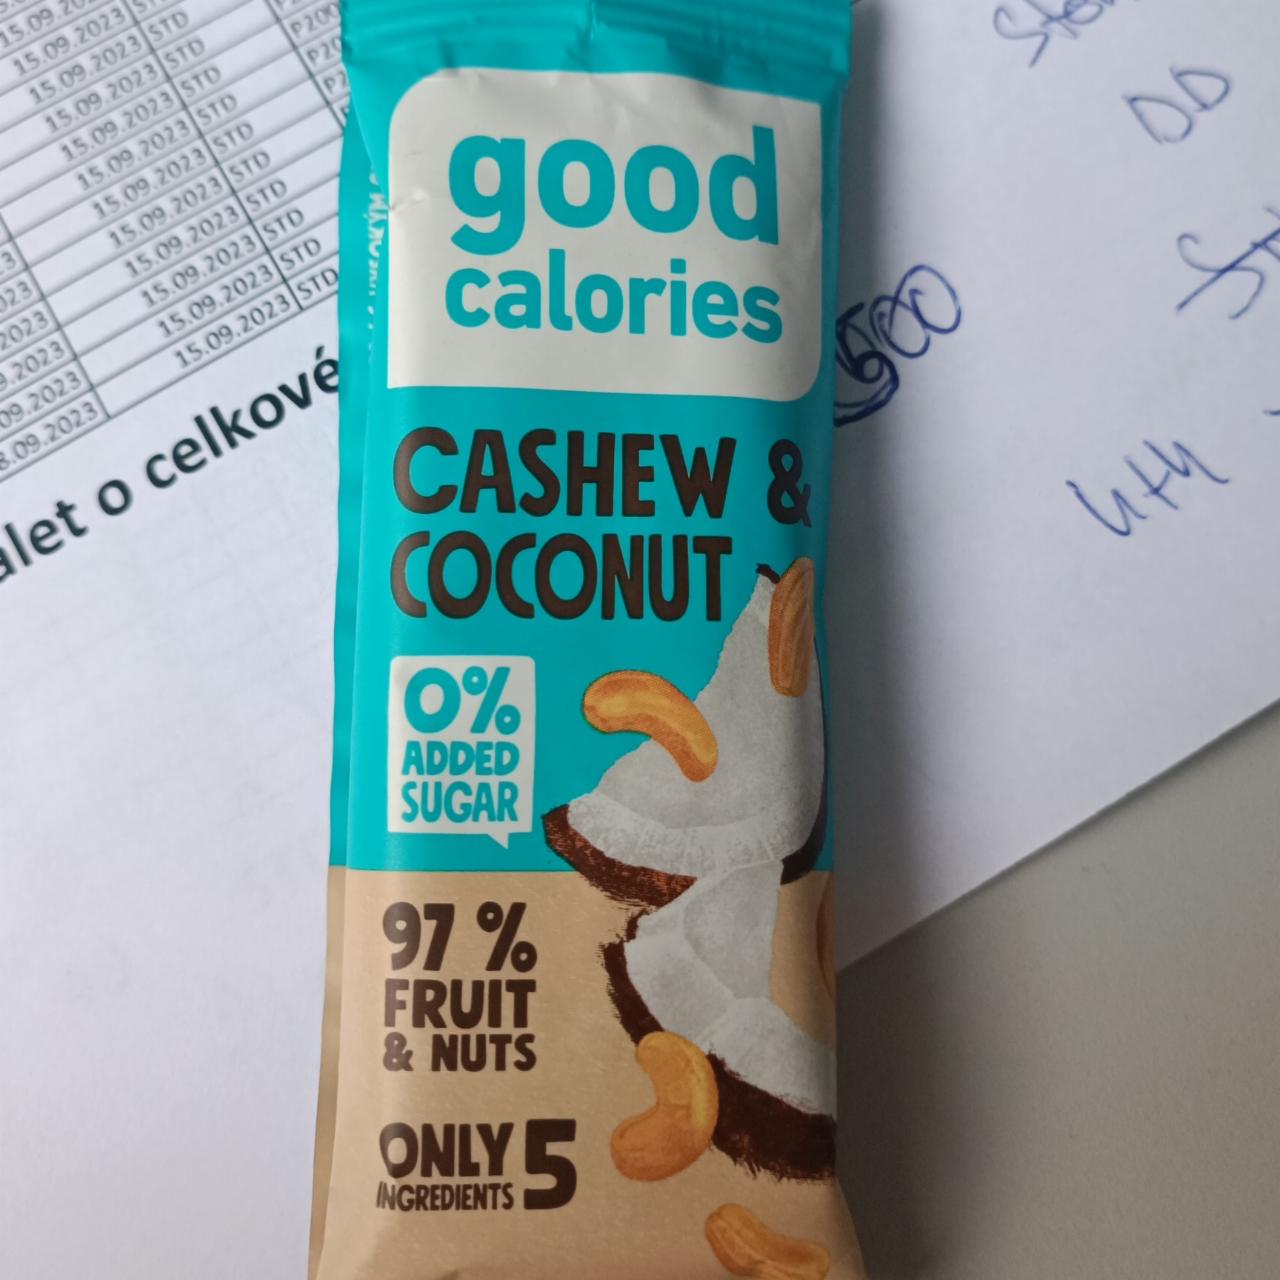 Fotografie - Cashew & coconut Bar Good calories